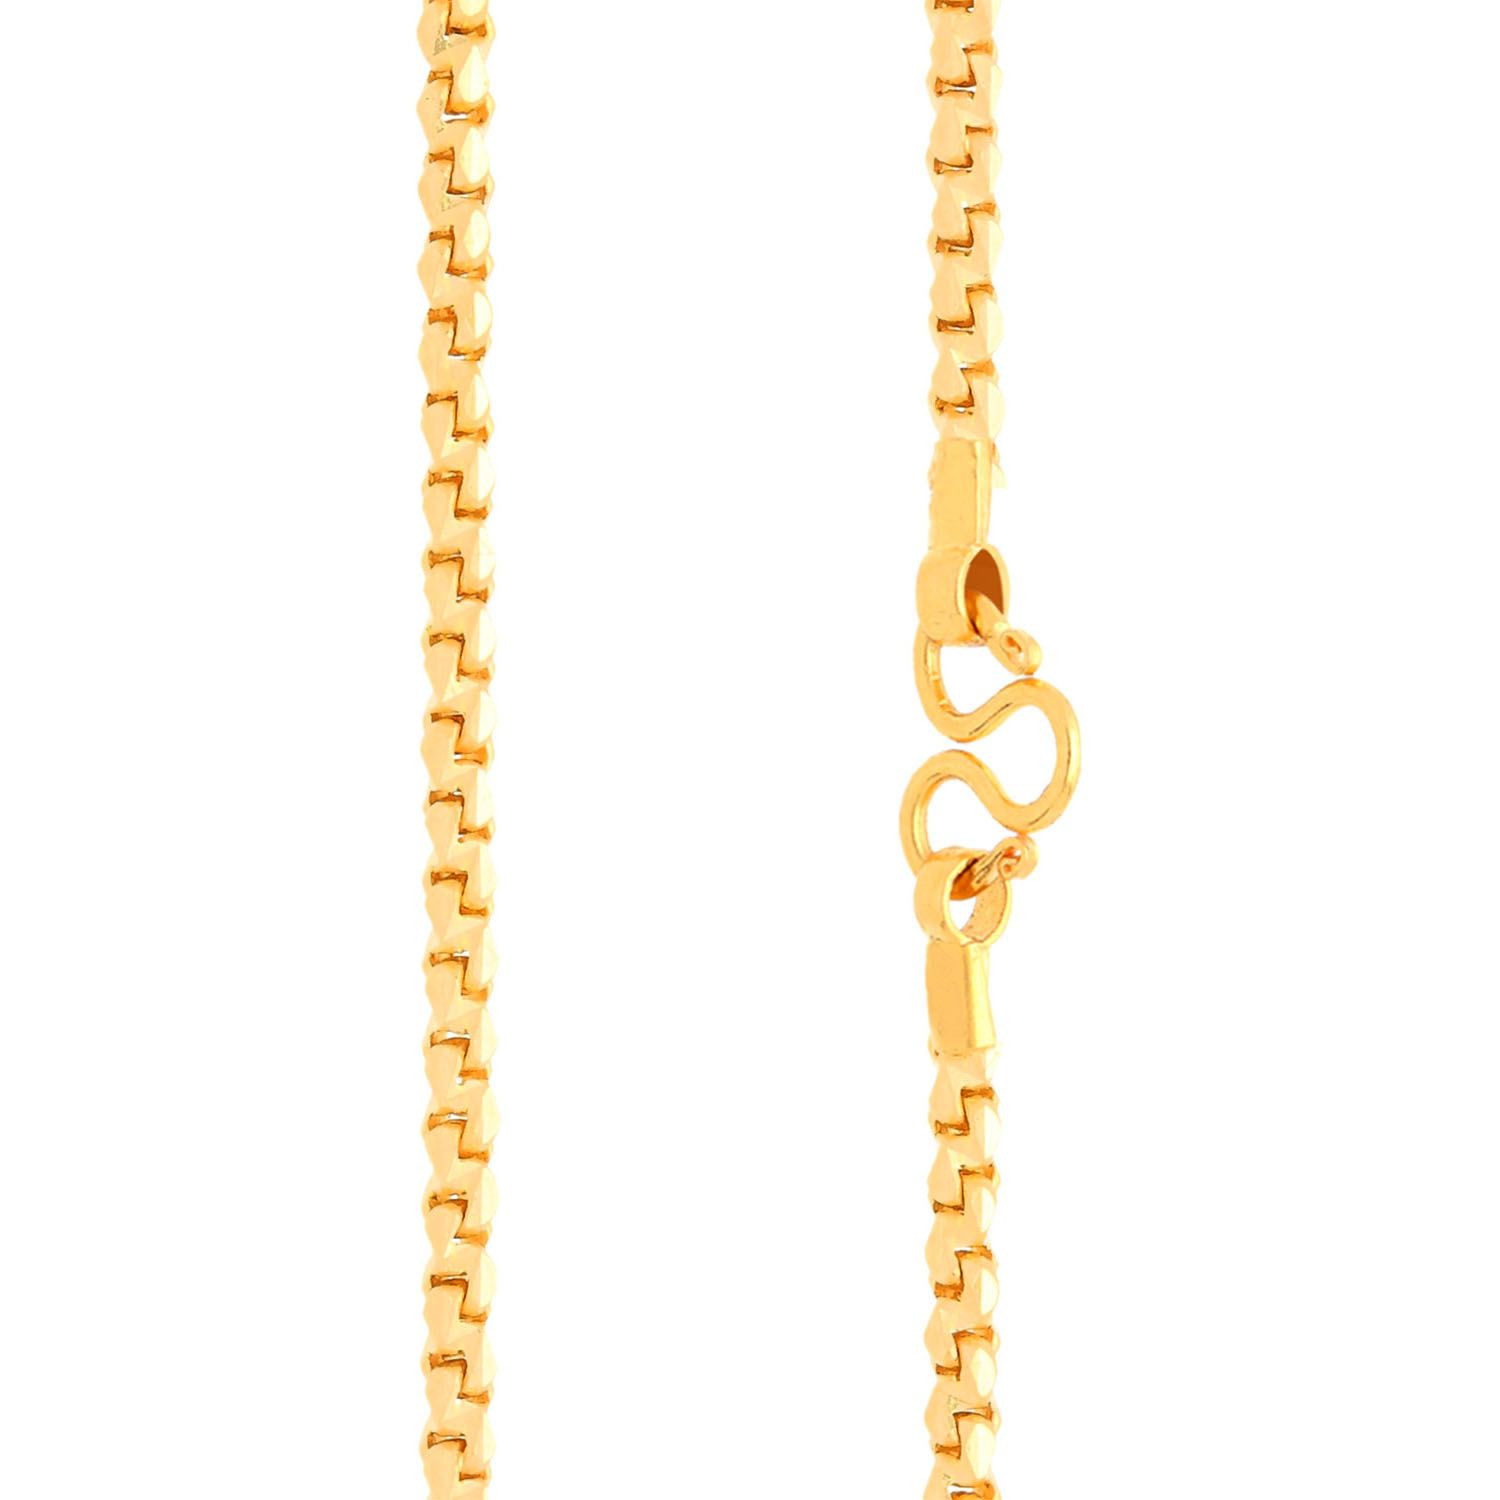 Malabar 22 KT Gold Machine Made Chain CHSRTNHMRGT048